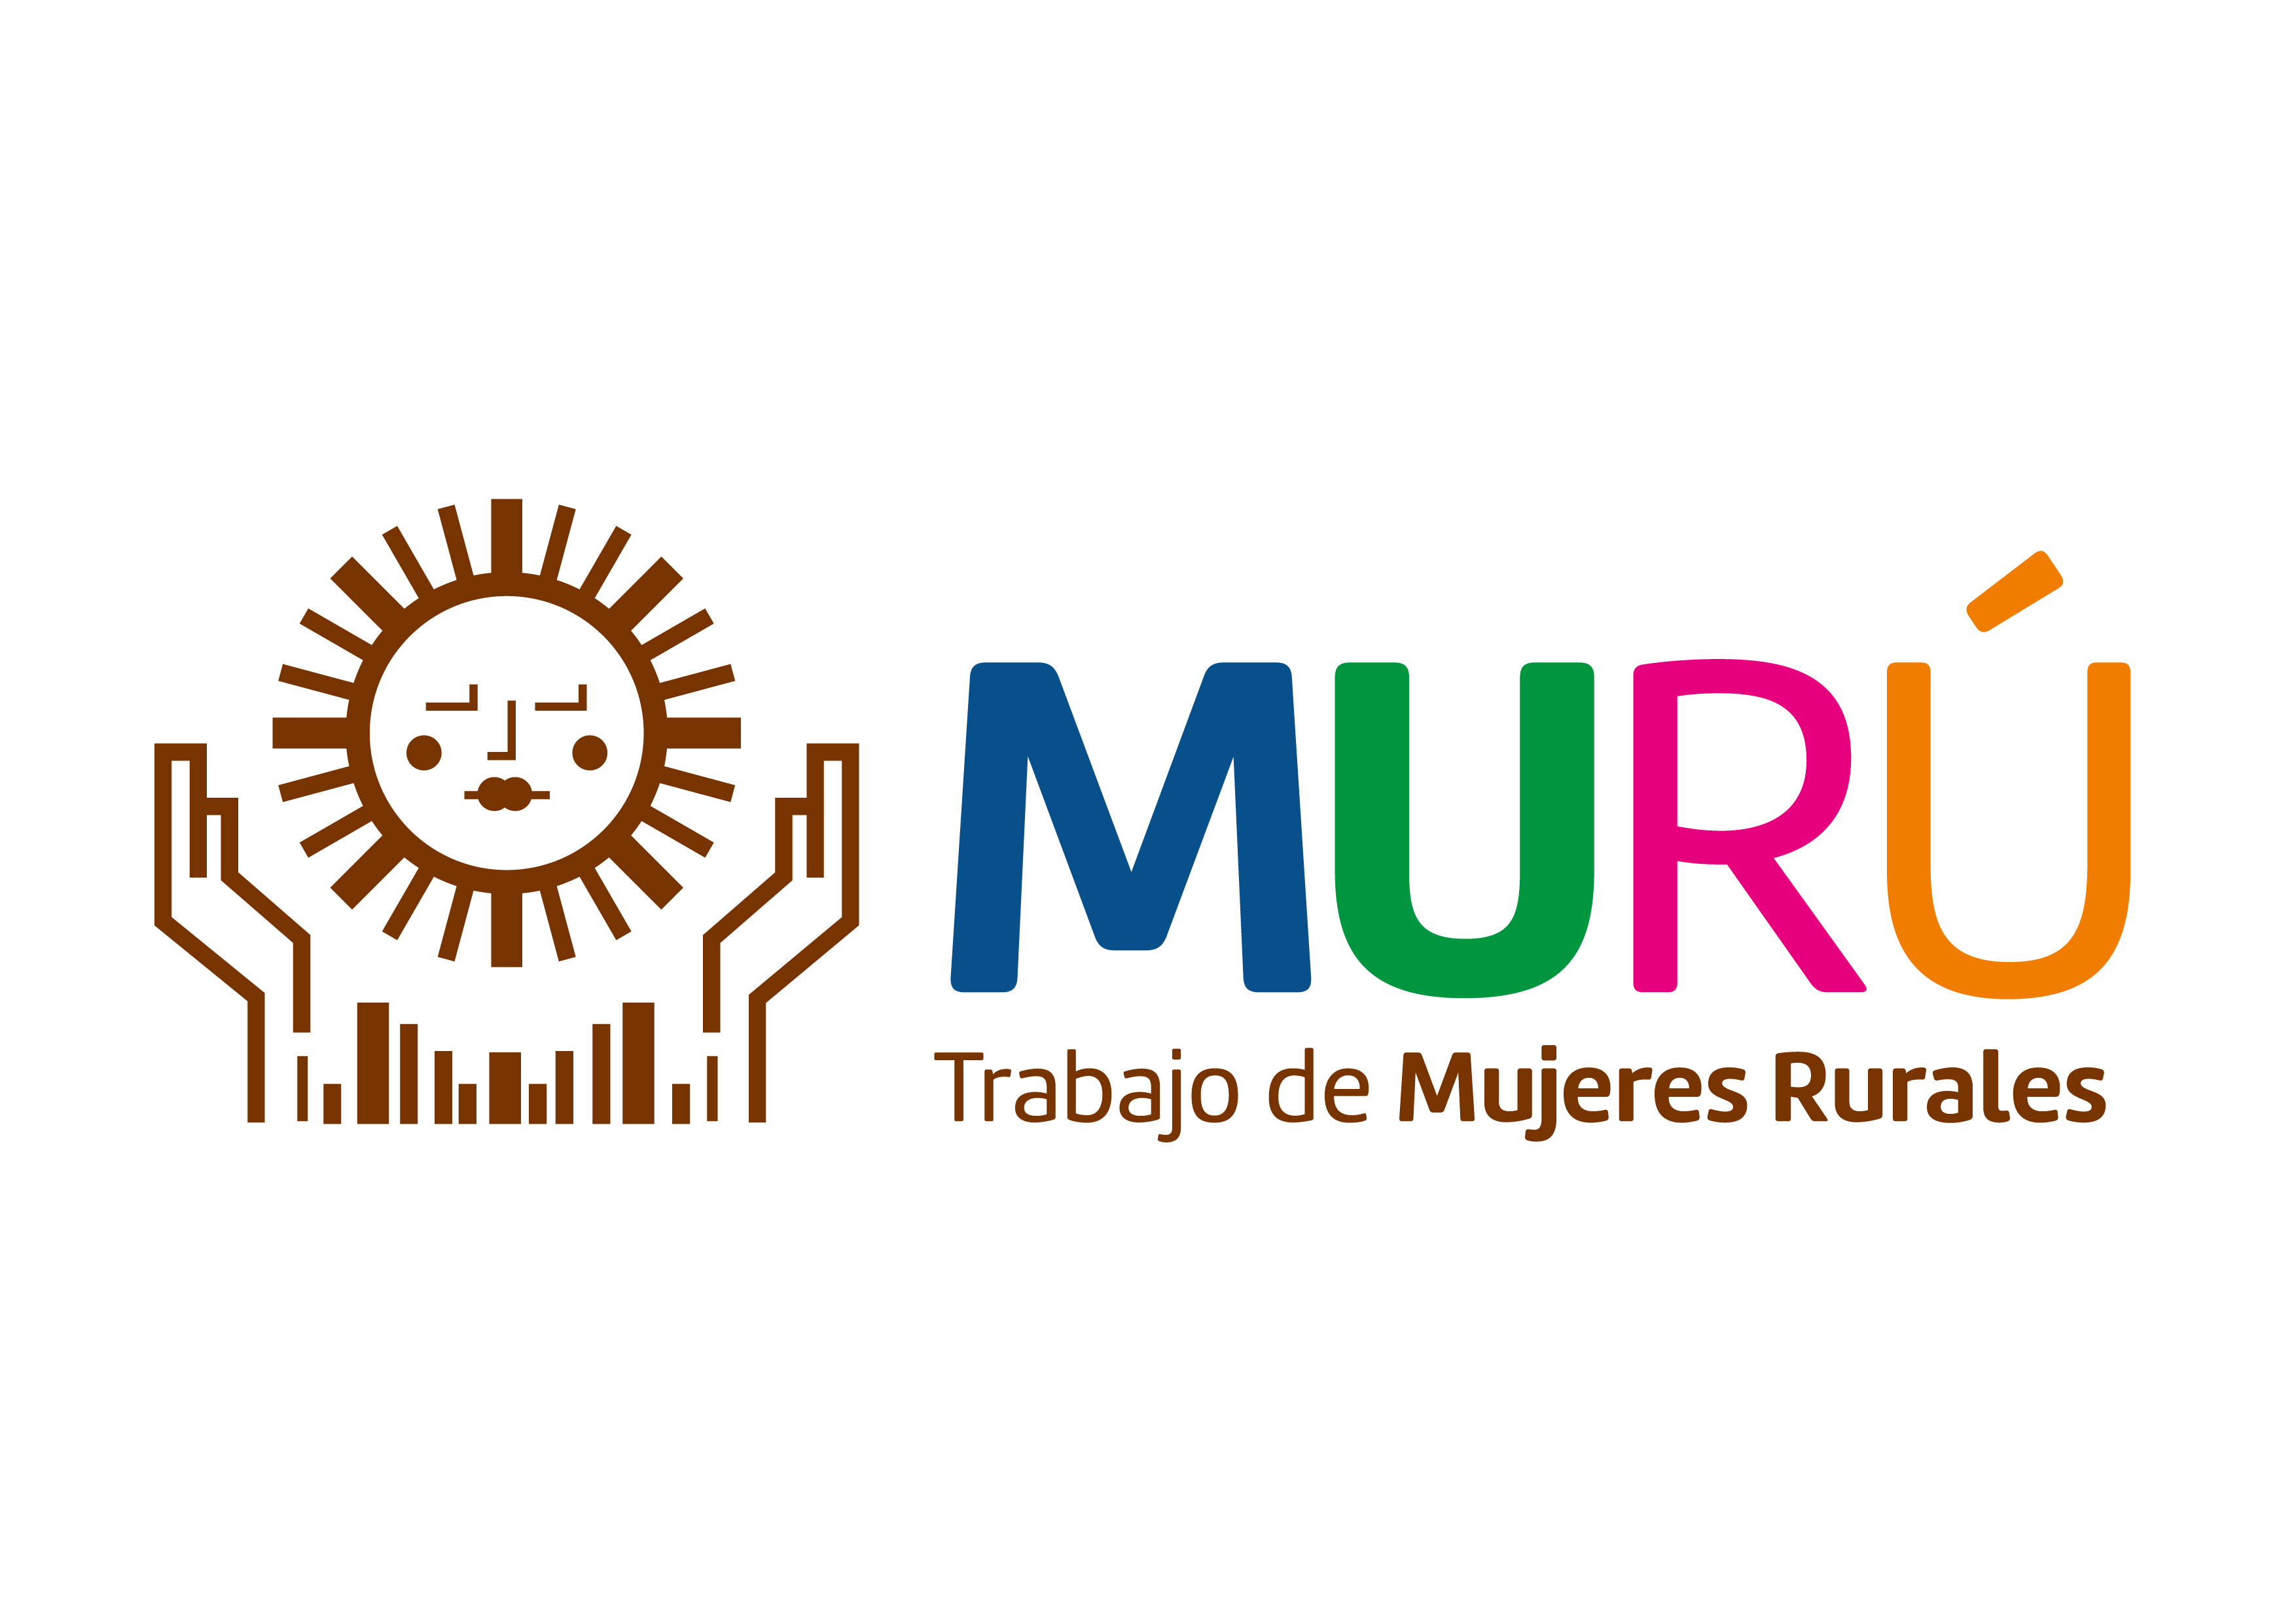 Logotipo marca "Murú"